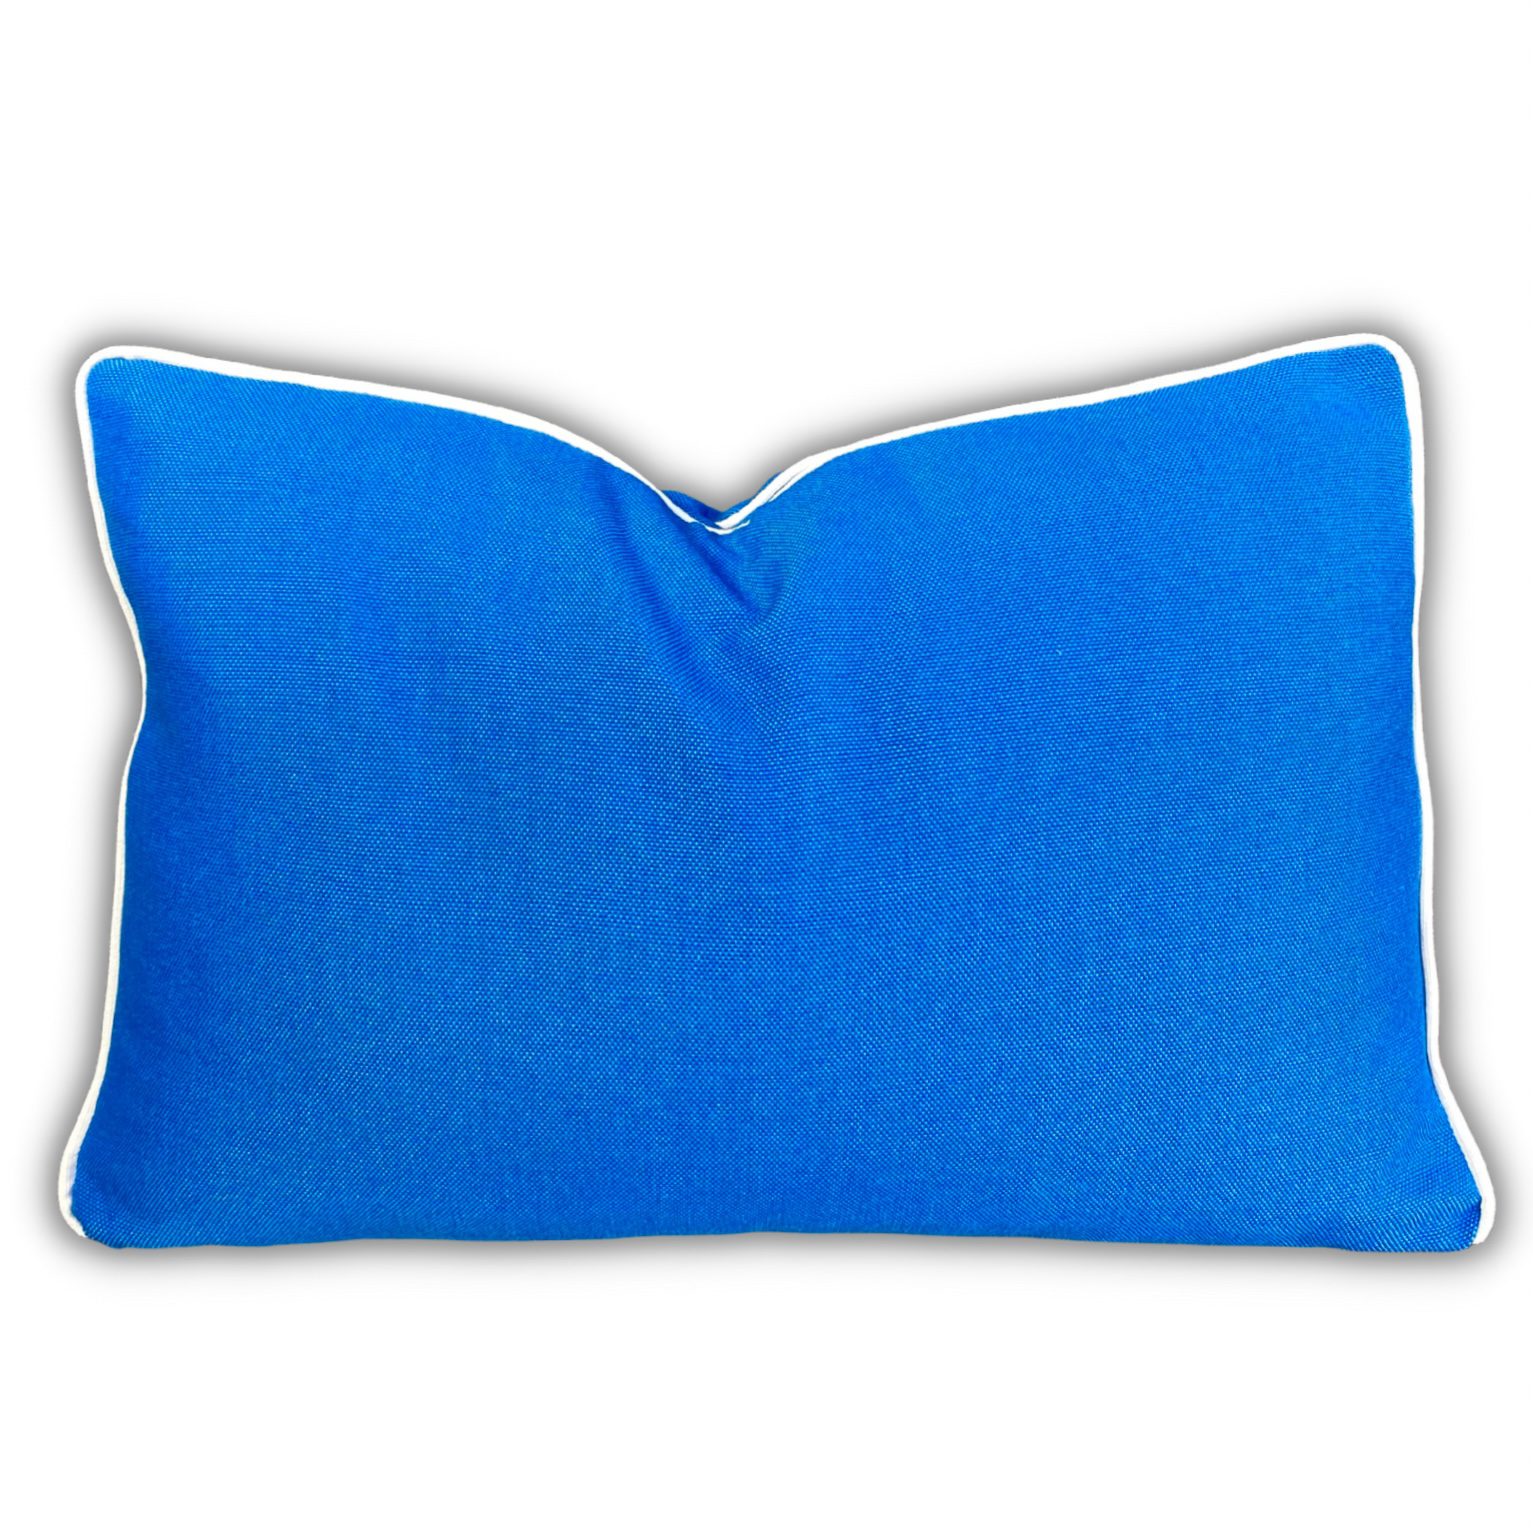 Royal Blue Outdoor Cushion.